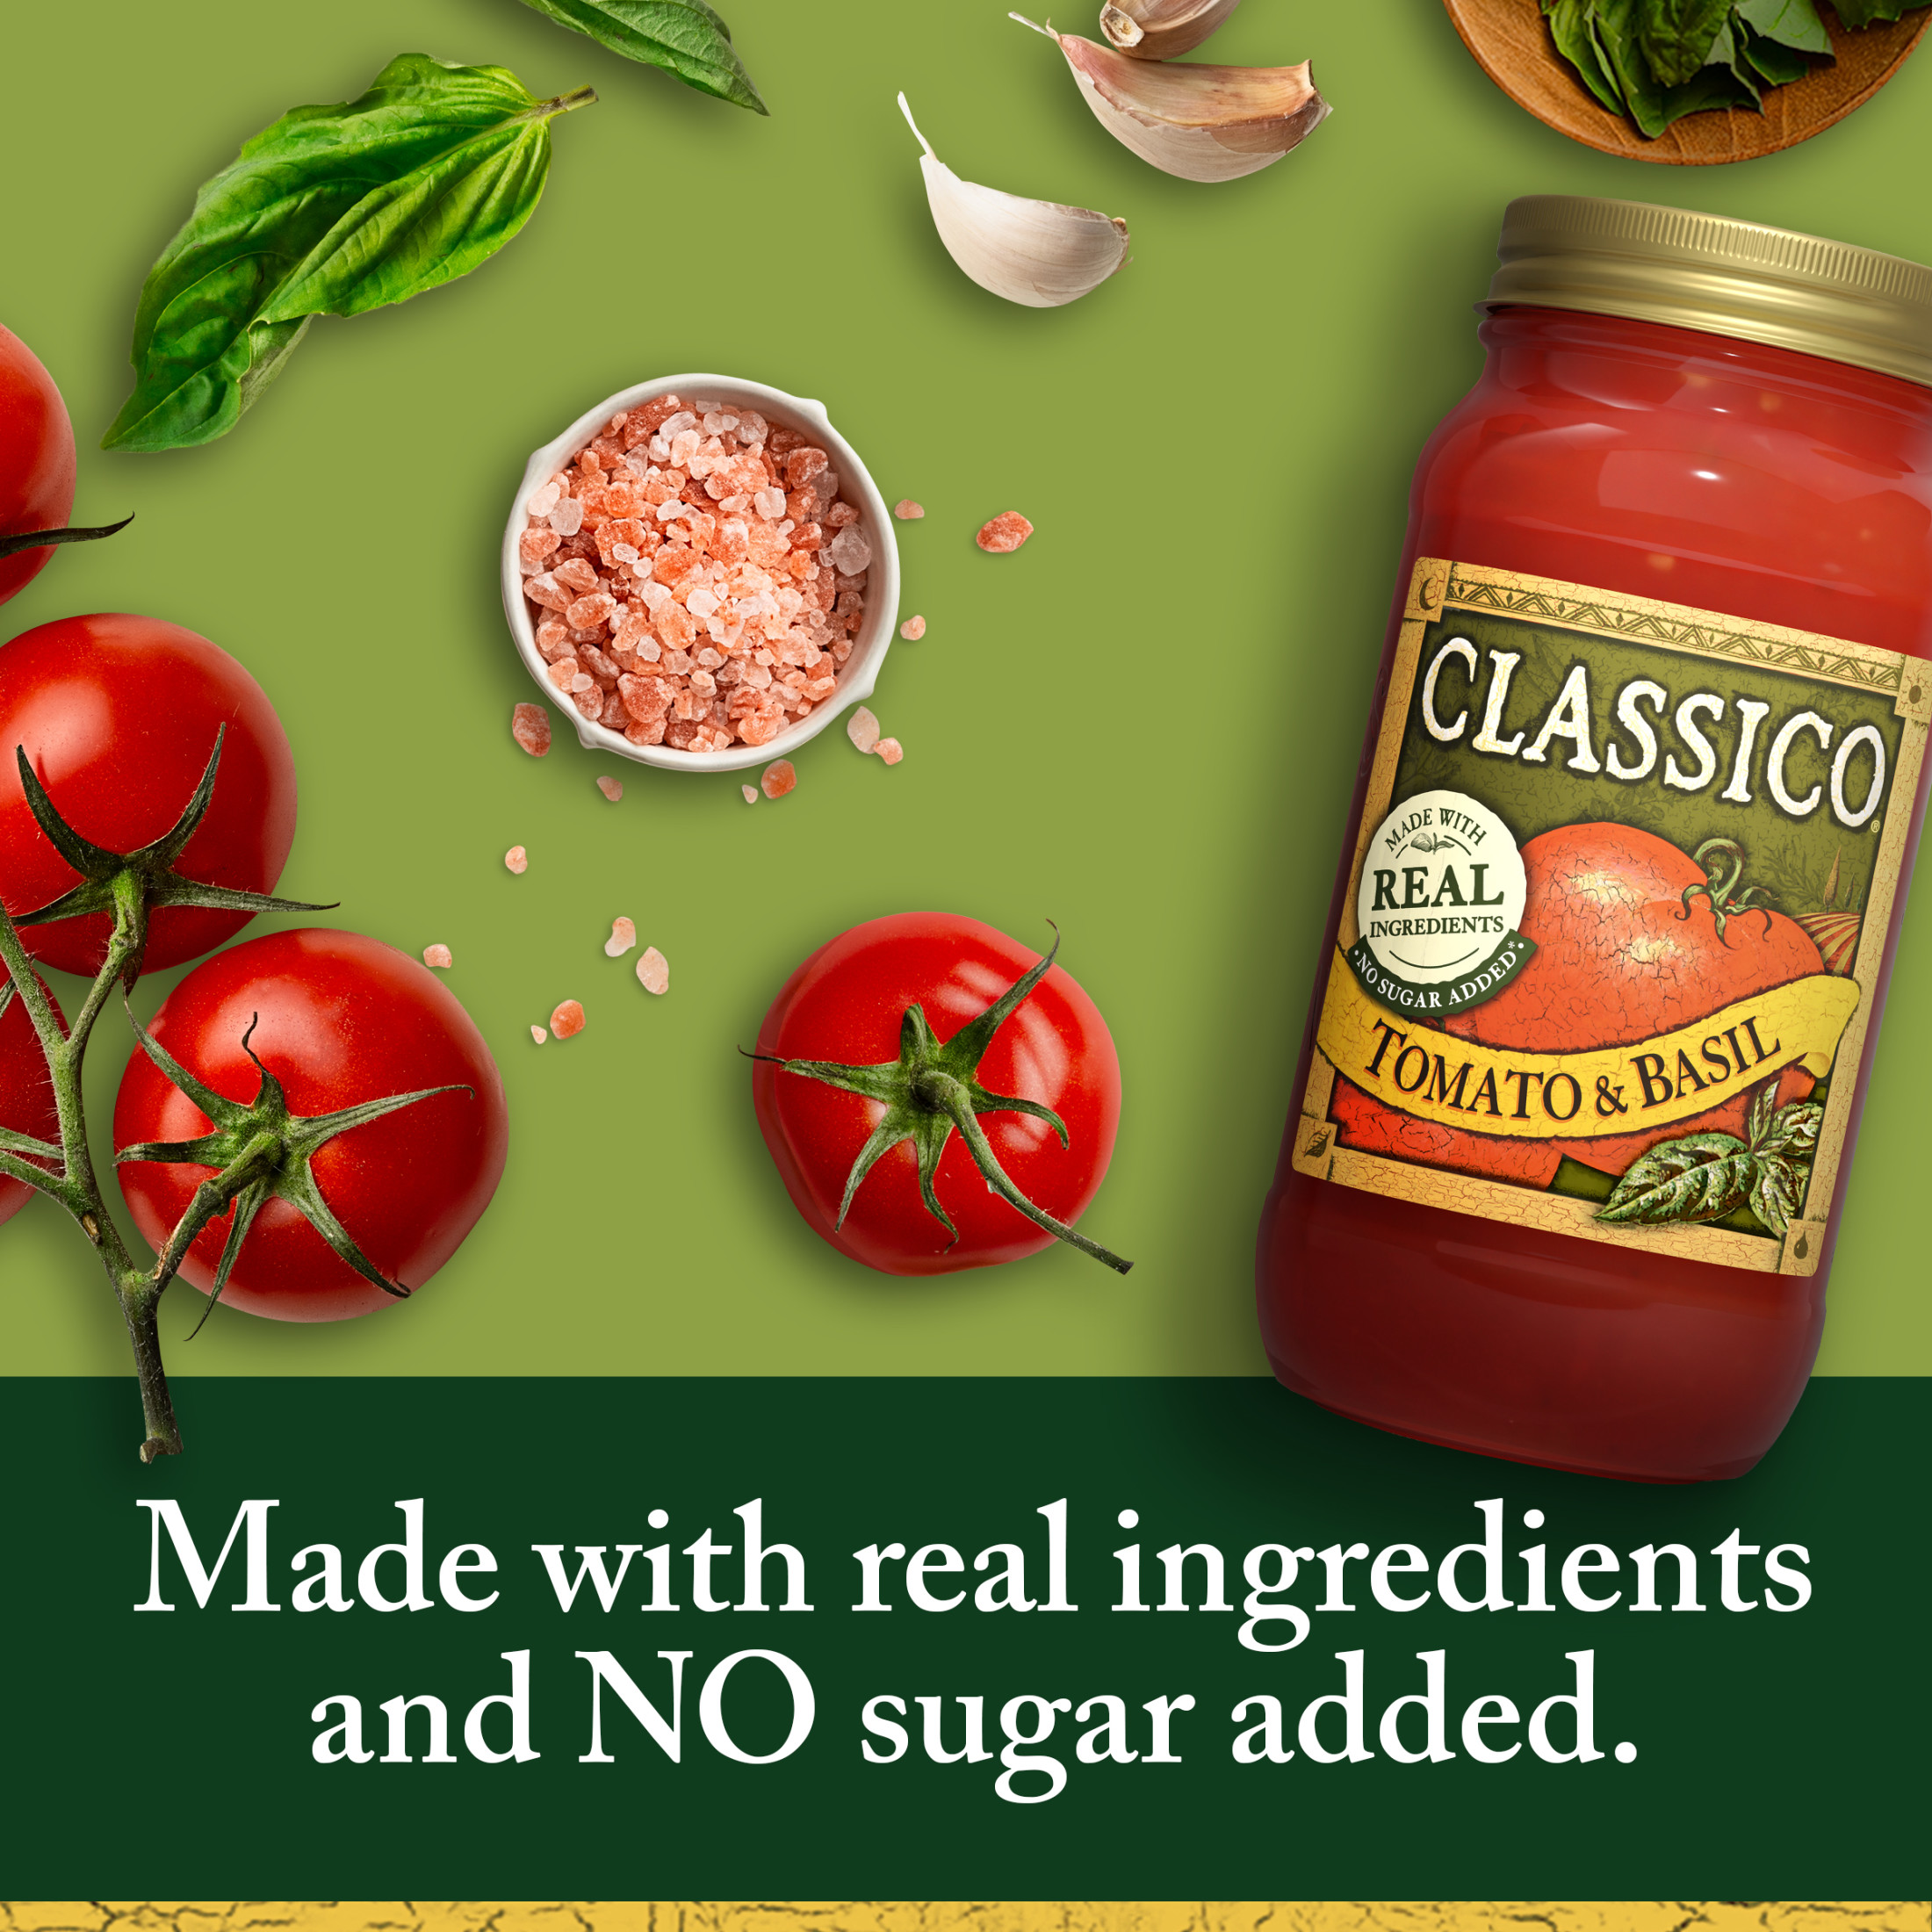 Classico Tomato & Basil Spaghetti Pasta Sauce, 24 oz. Jar - image 3 of 16